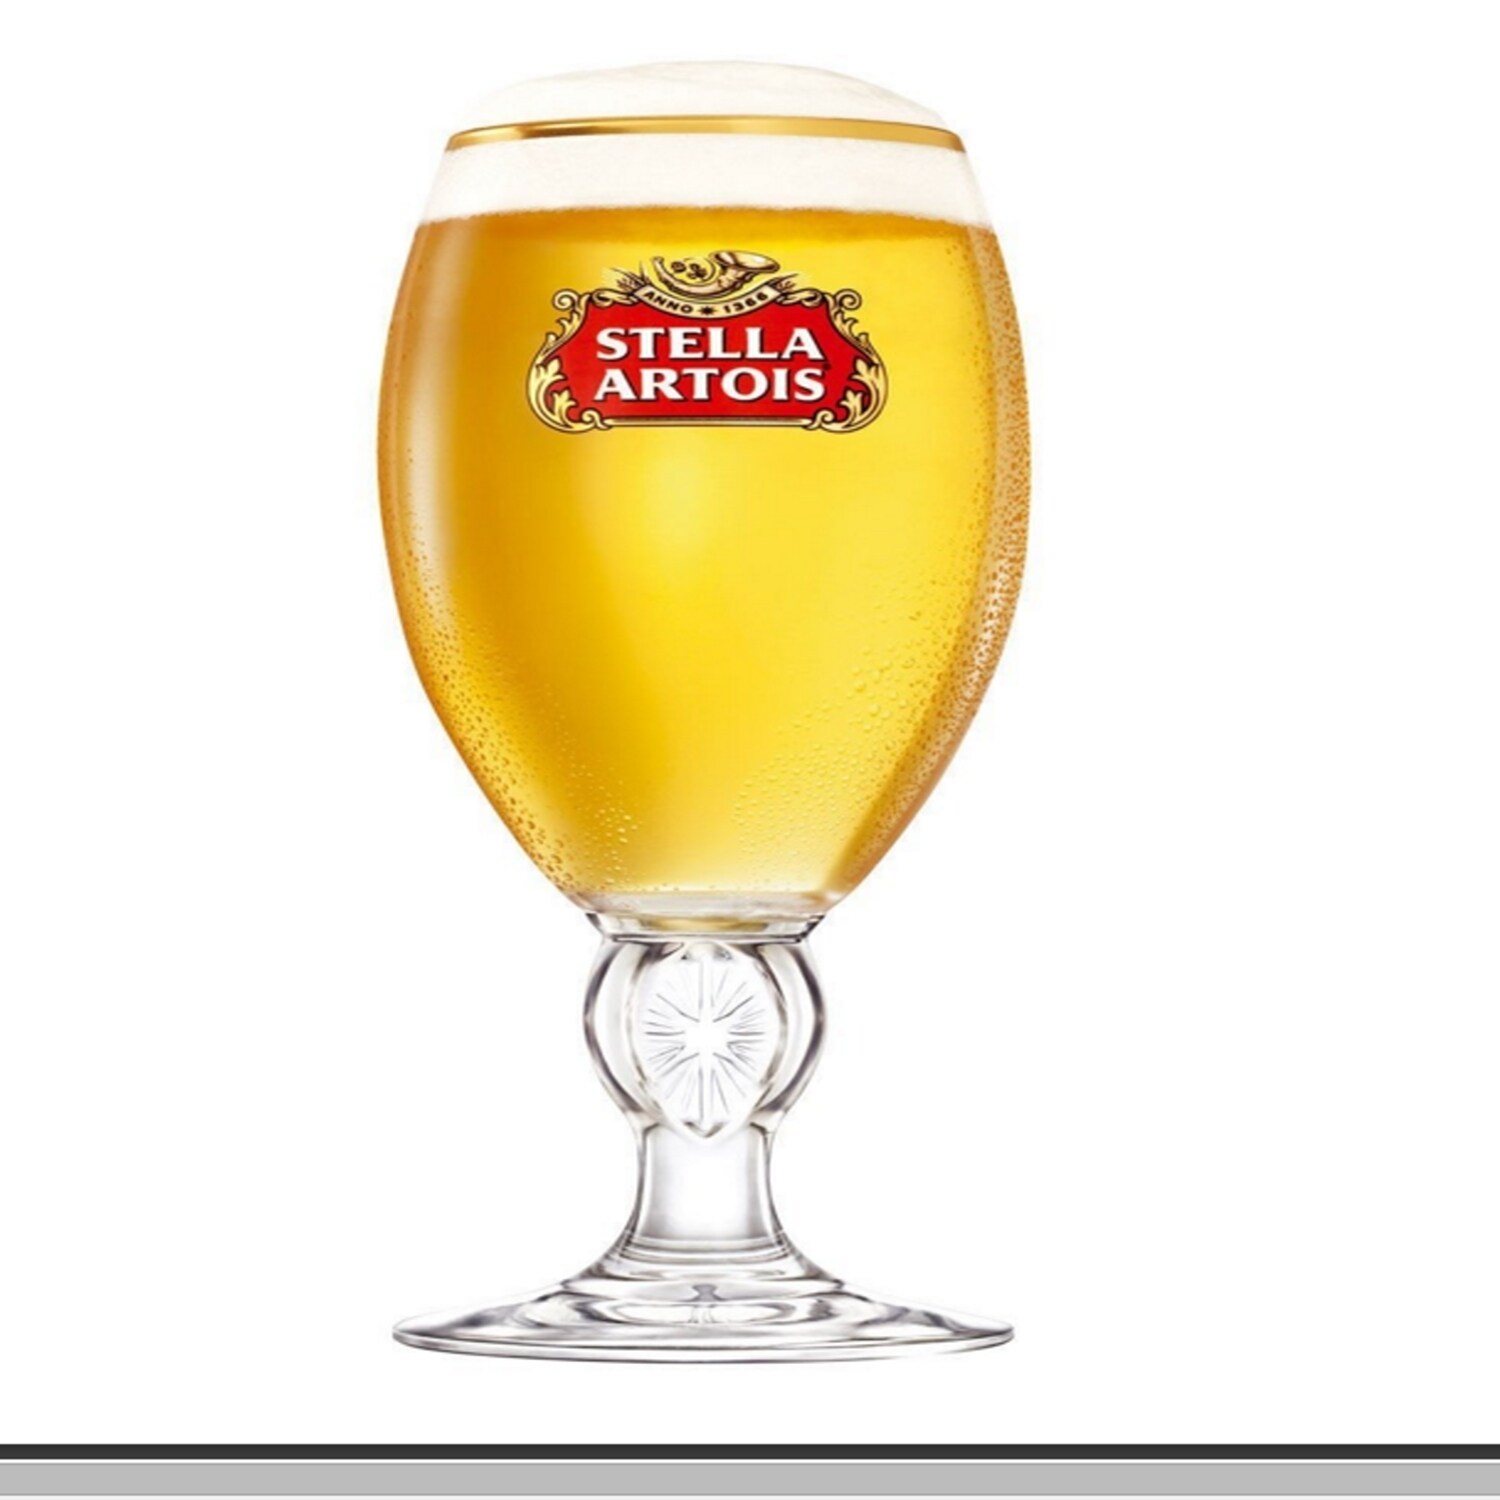 https://ak1.ostkcdn.com/images/products/11365251/Stella-Artois-Belgium-Beer-Glasses-40-Centiliter-Star-Chalice-Set-of-4-9defc89a-322a-405f-8666-bd8fc3e92f3c.jpg